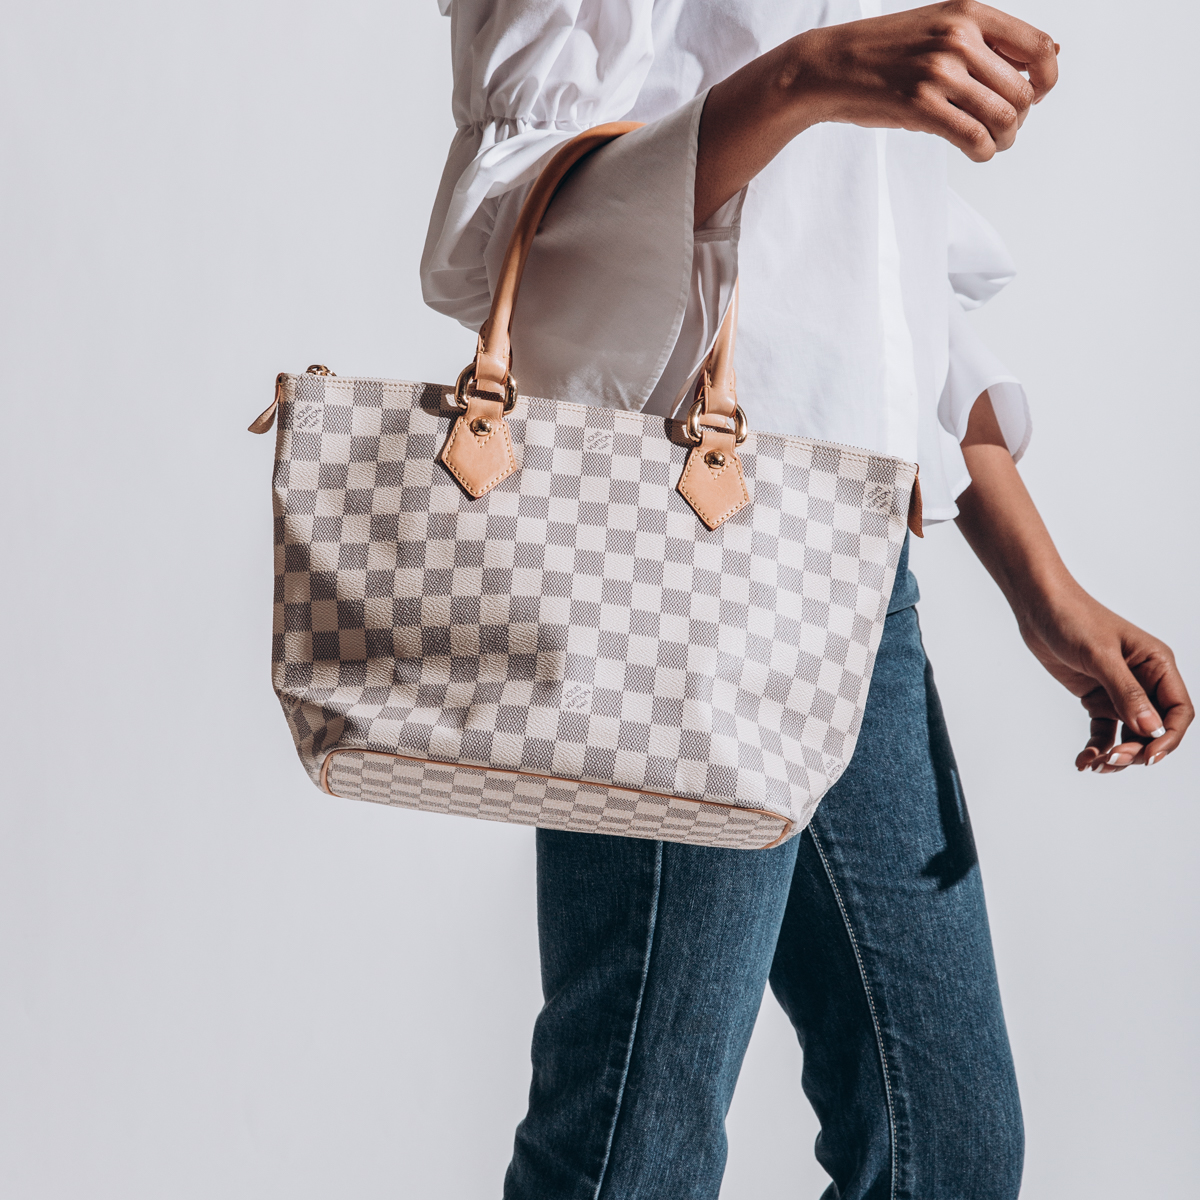 Designer Handbags - Capital Pawn